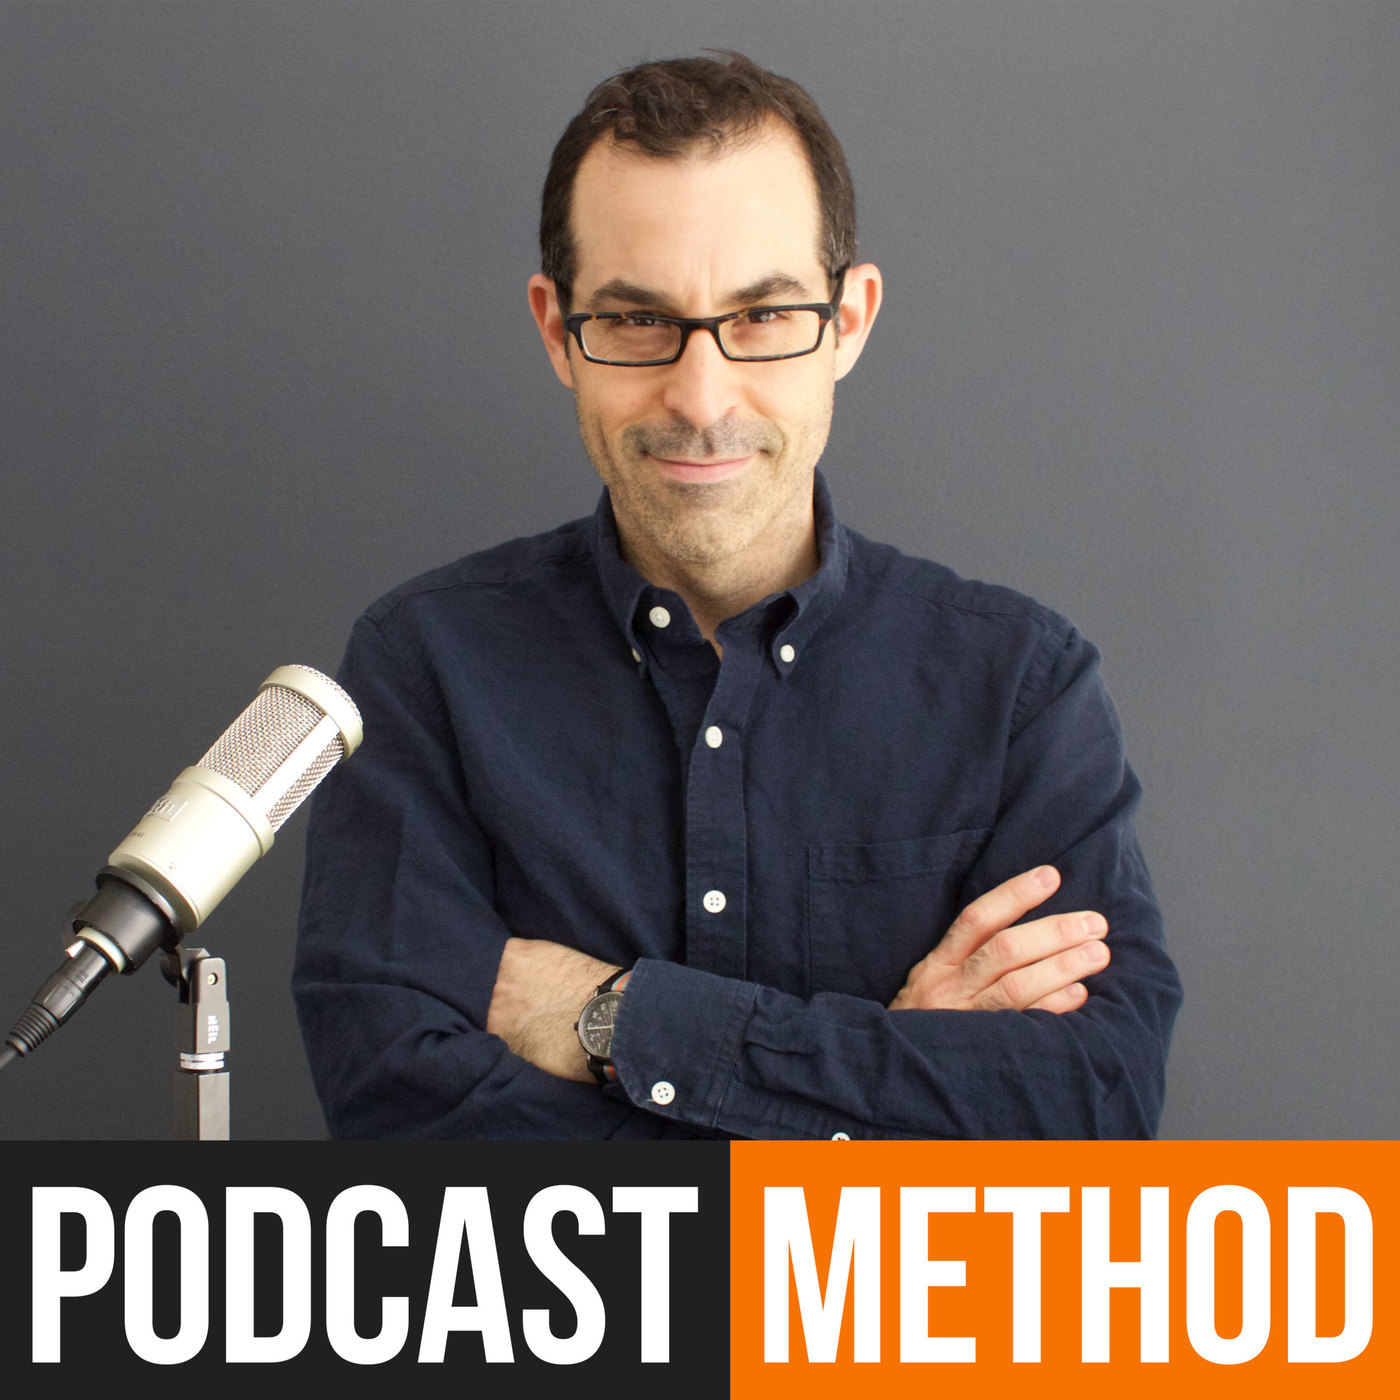 Podcast Method Episode 14 Rapport